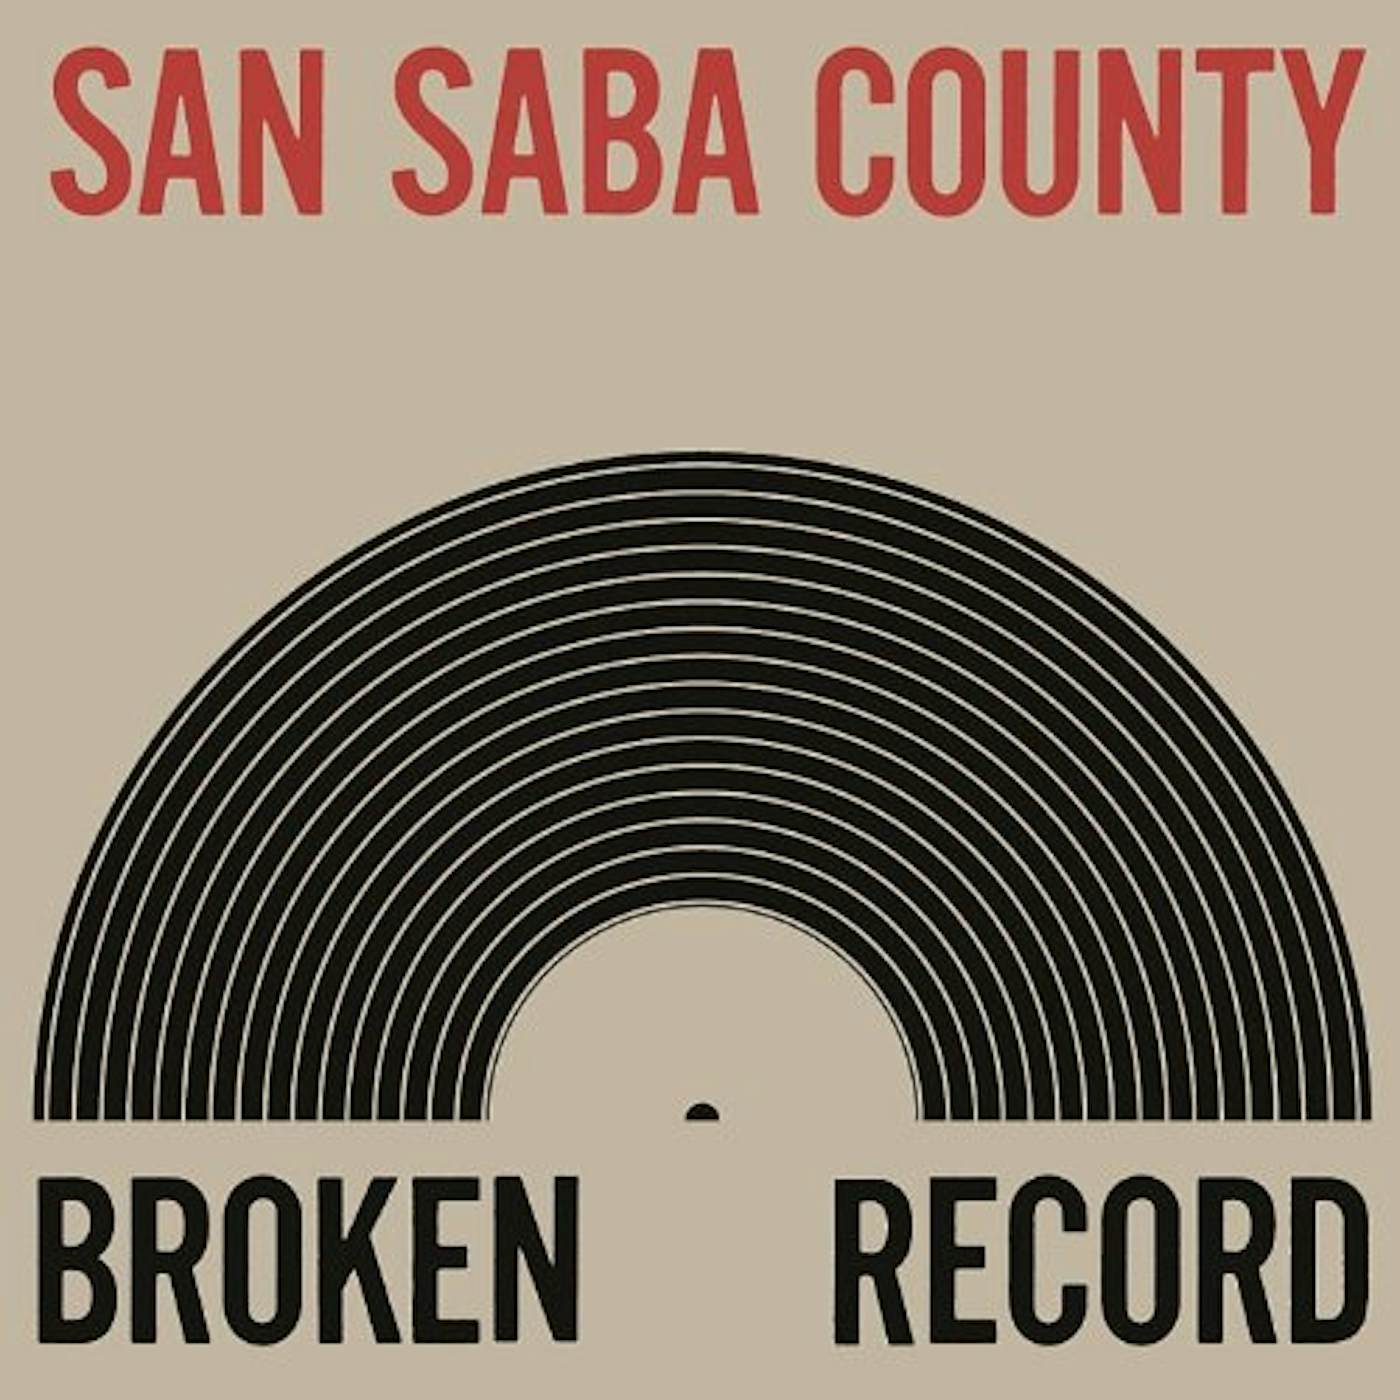 San Saba County Broken Record Vinyl Record